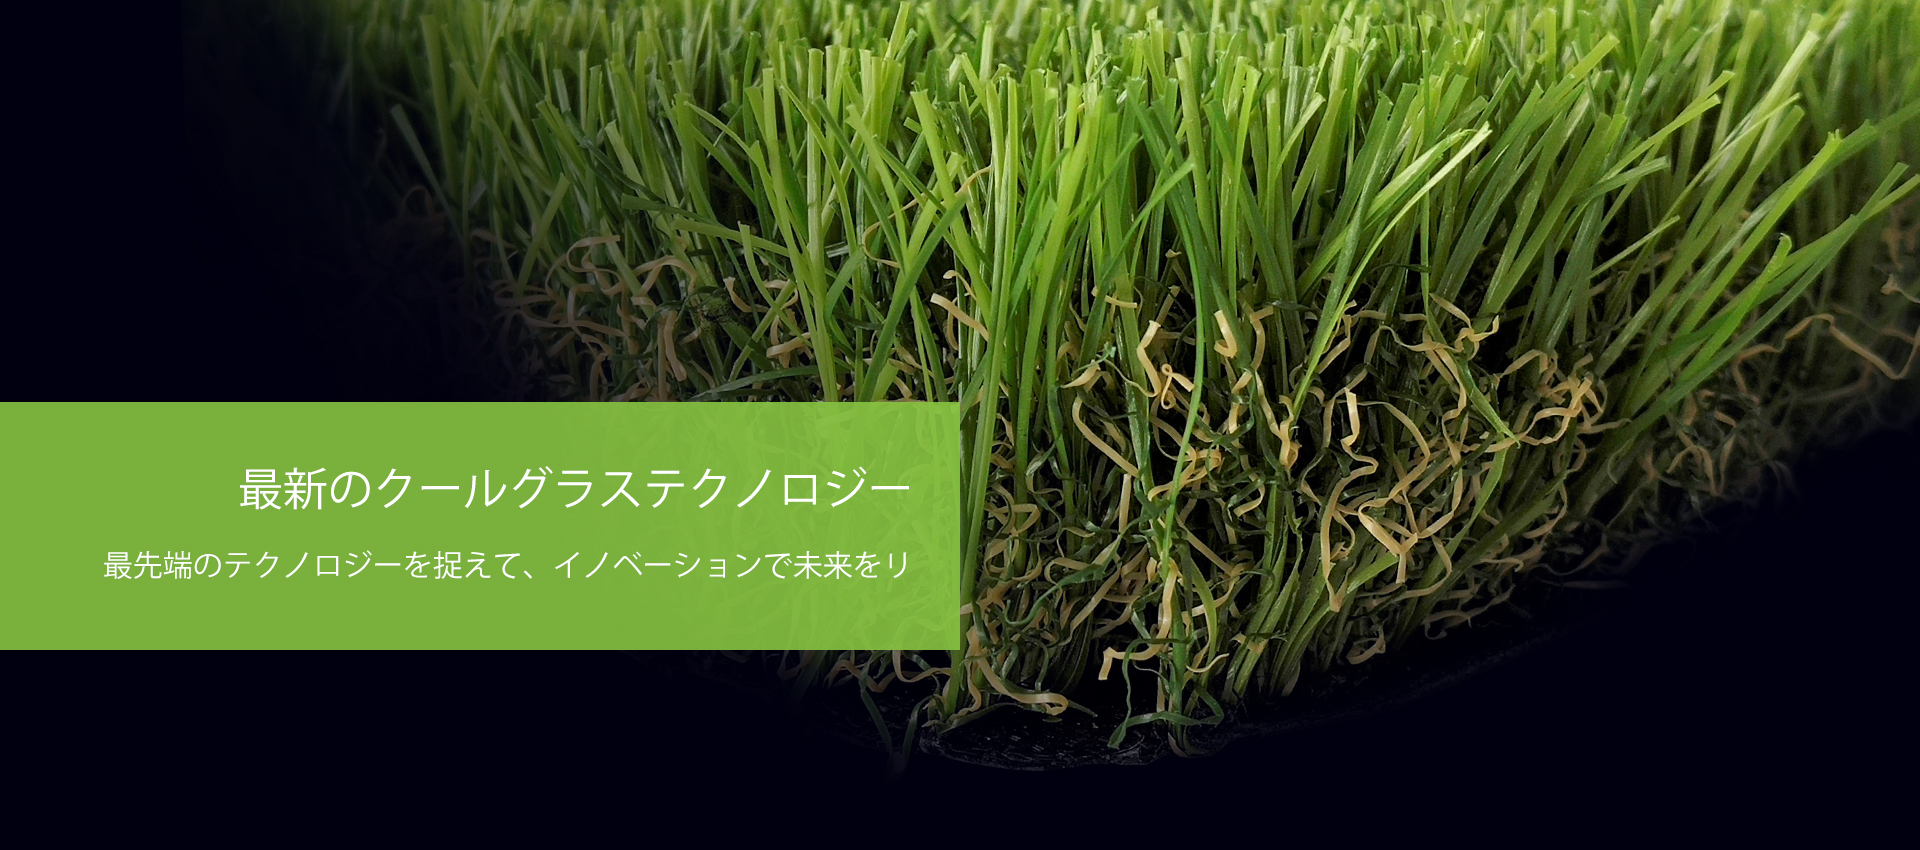 日2Cool Grass